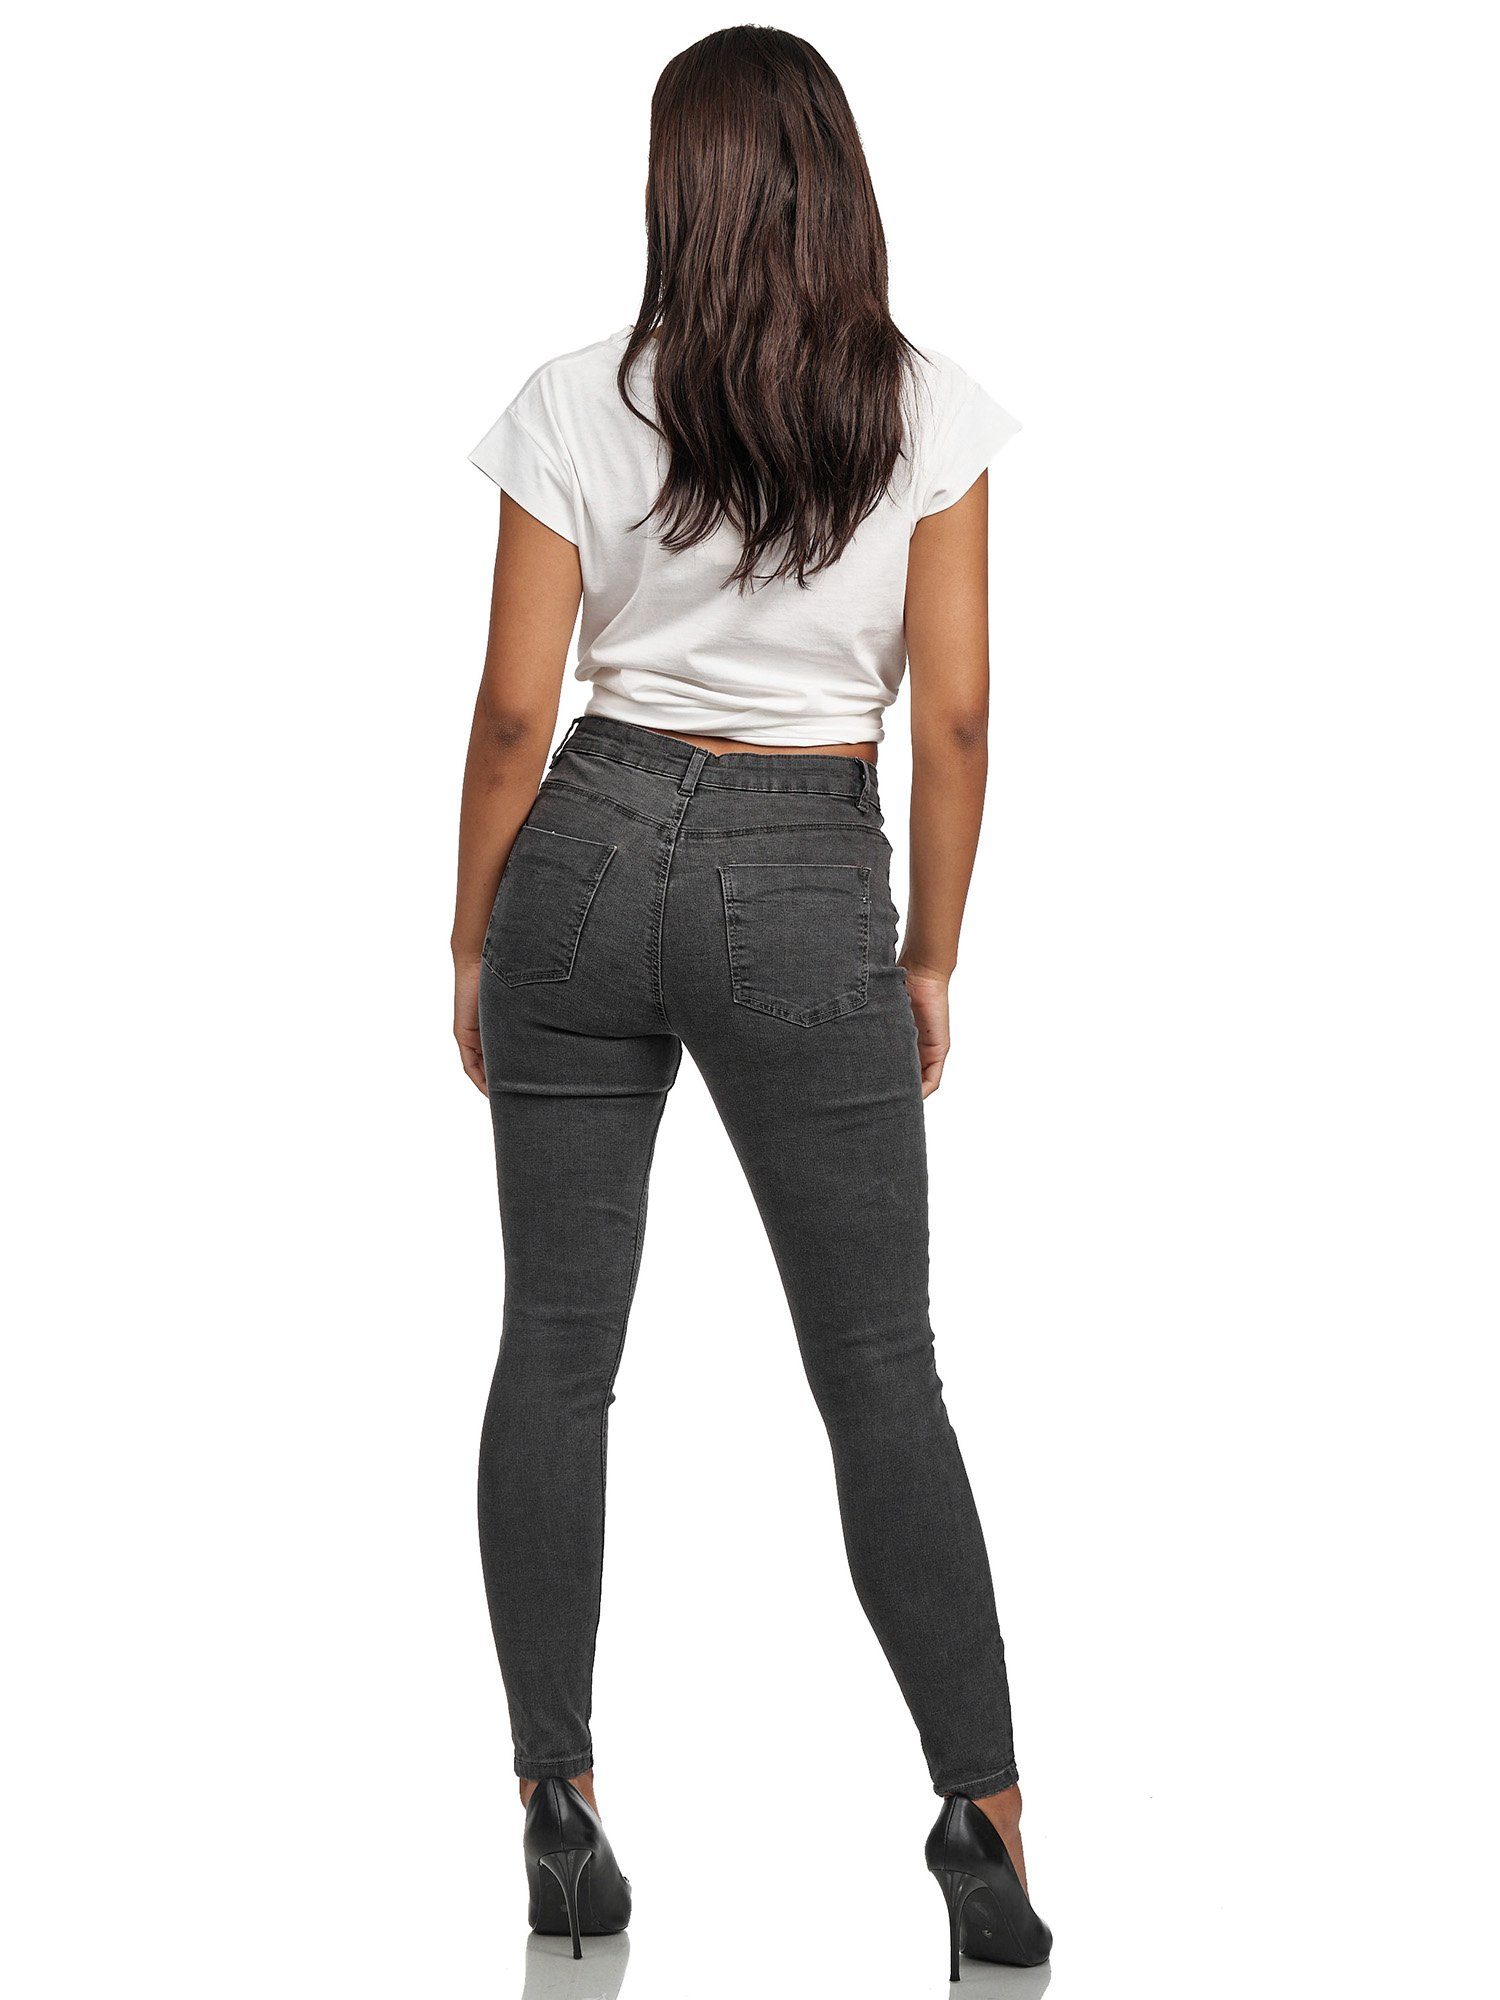 Fit Damen F101 anthrazit Tazzio High-waist-Jeans Jeanshose Skinny